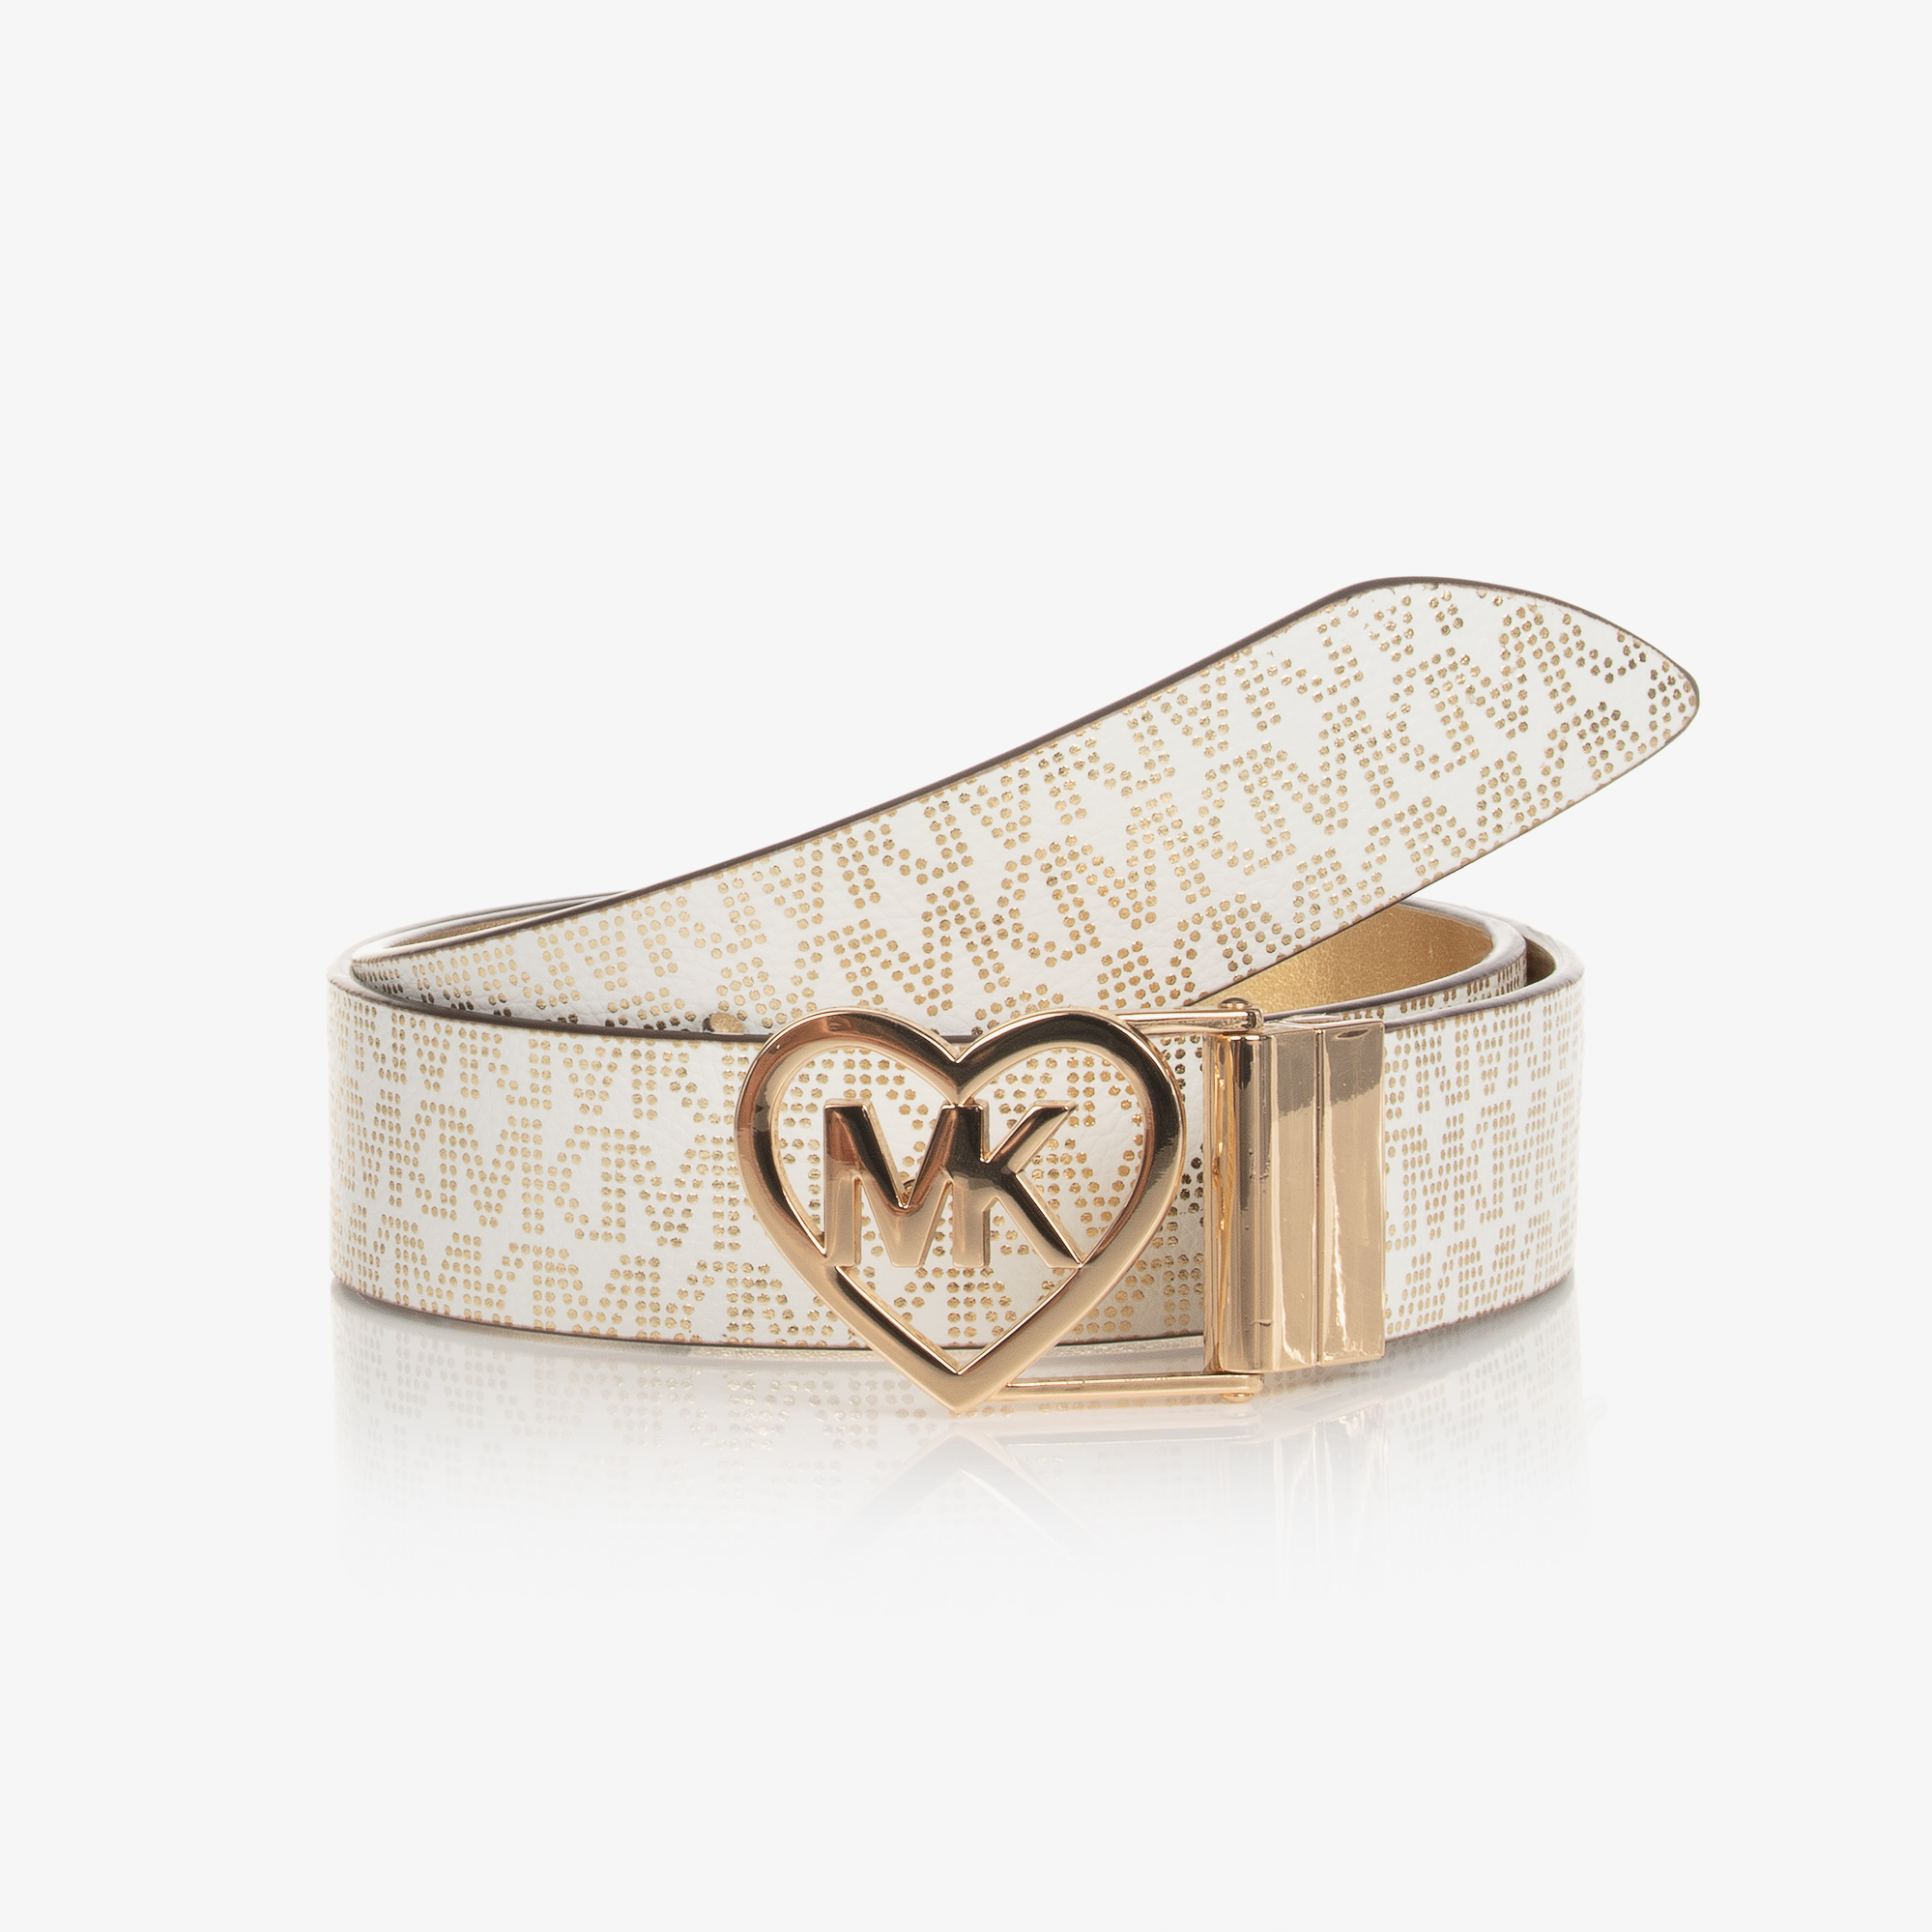 Michael Kors Gold-Tone Belt Ring- Adorable